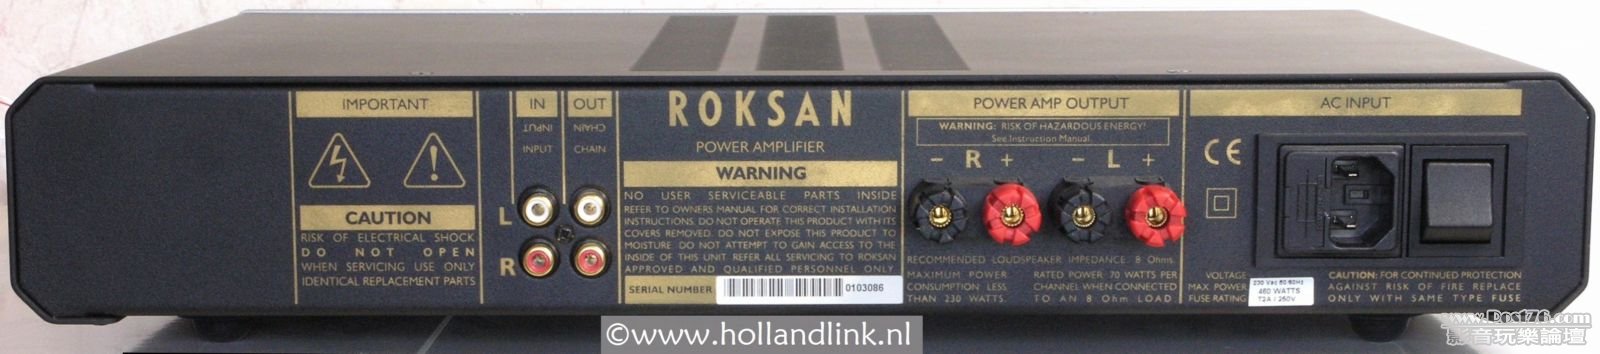 Roksan-PowerAmp-back.jpg